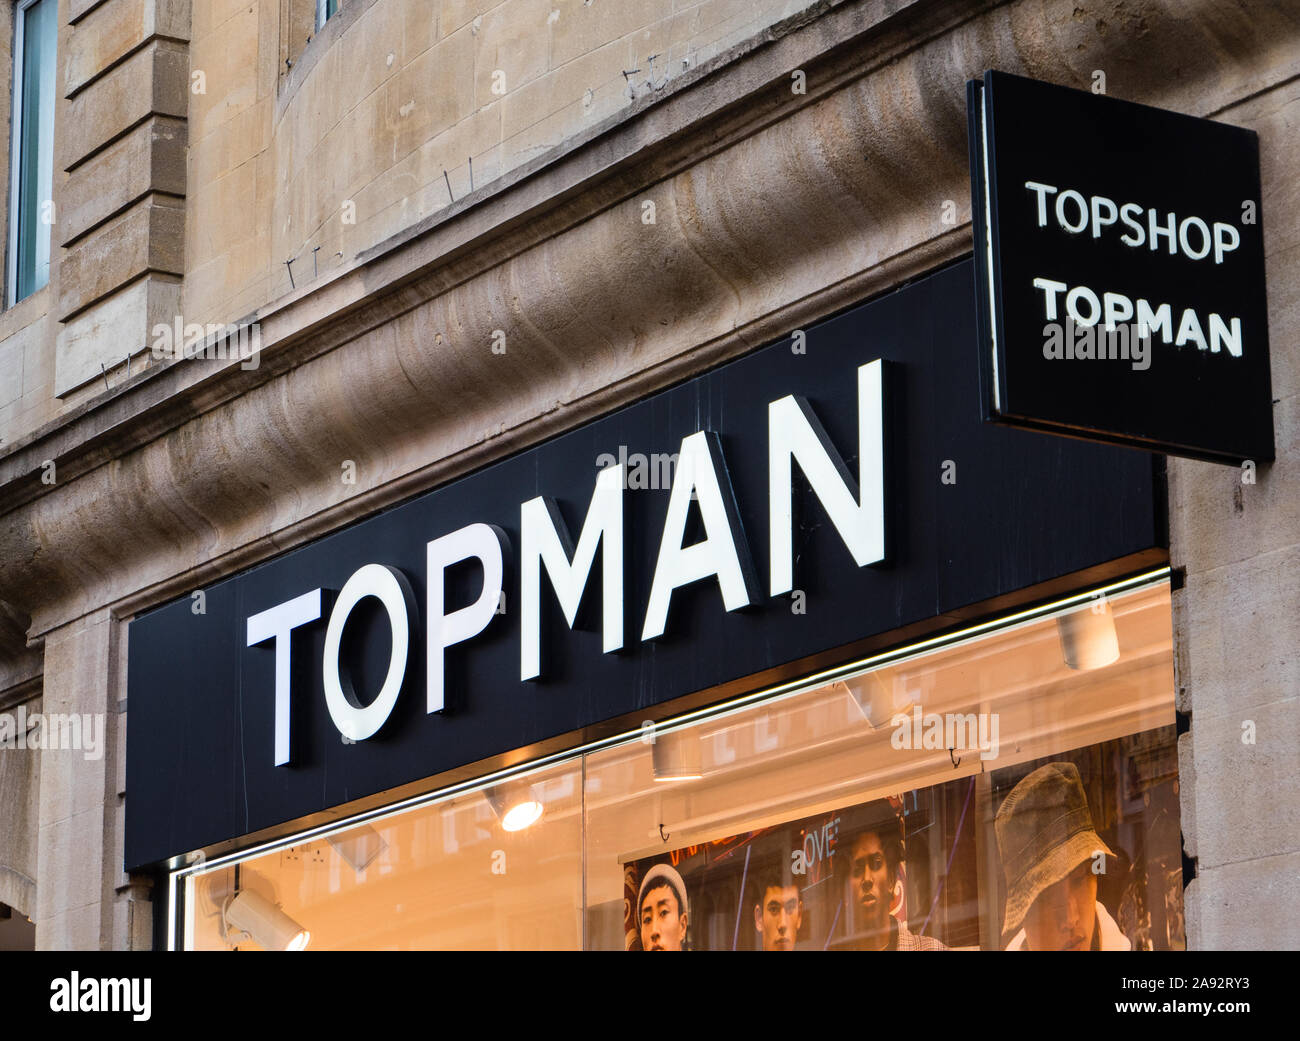 Topshop topman logo -Fotos und -Bildmaterial in hoher Auflösung – Alamy